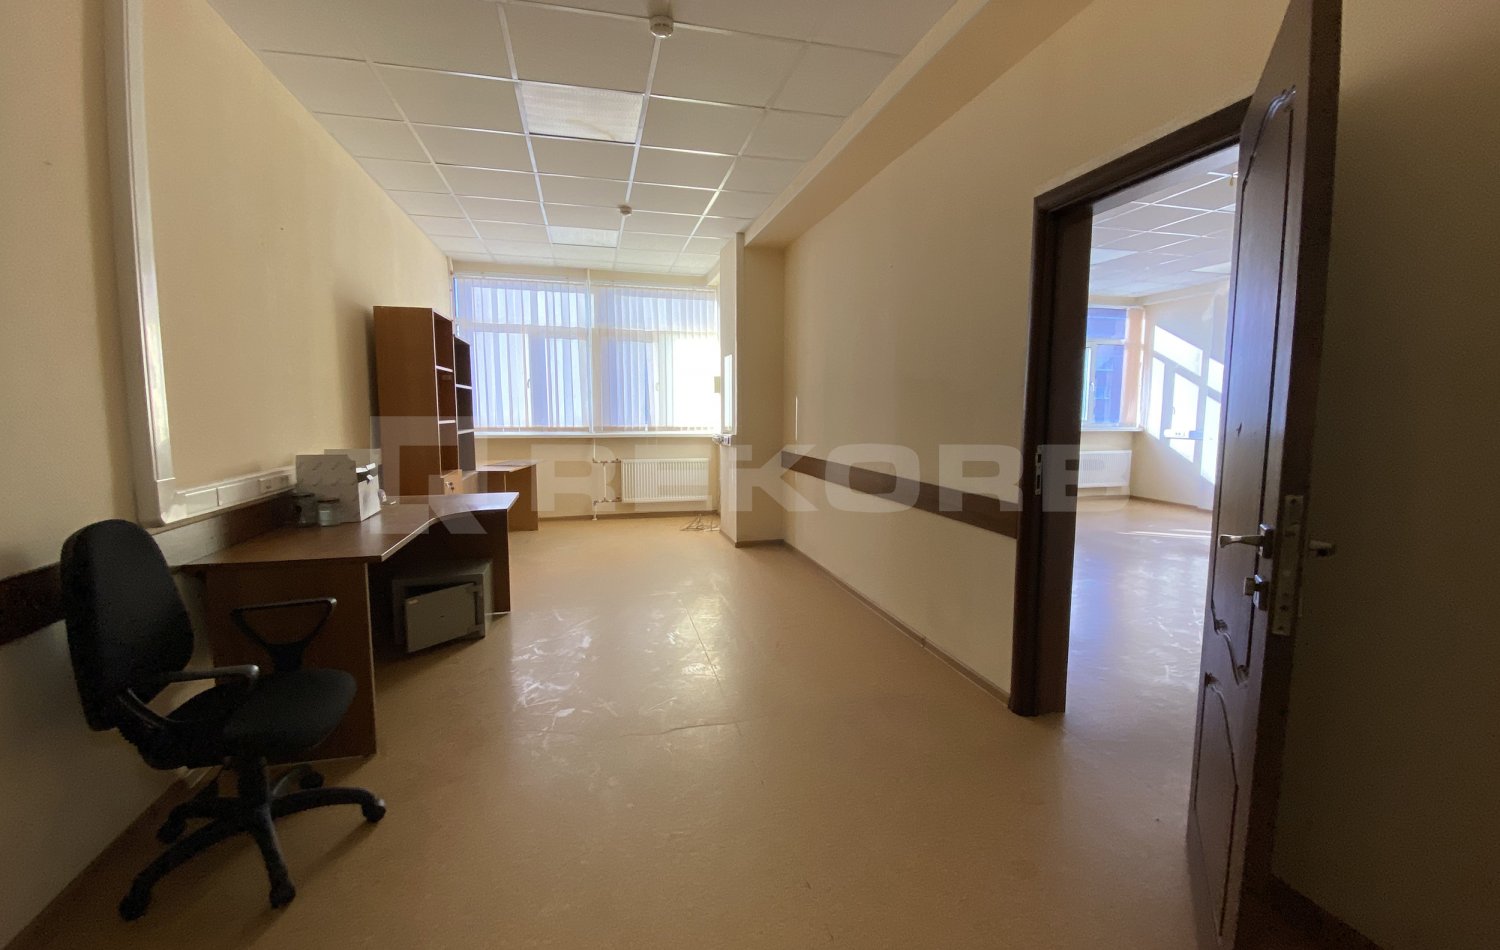 Офис в аренду 794 кв.м. в БЦ Гагарина 2 - фото 1